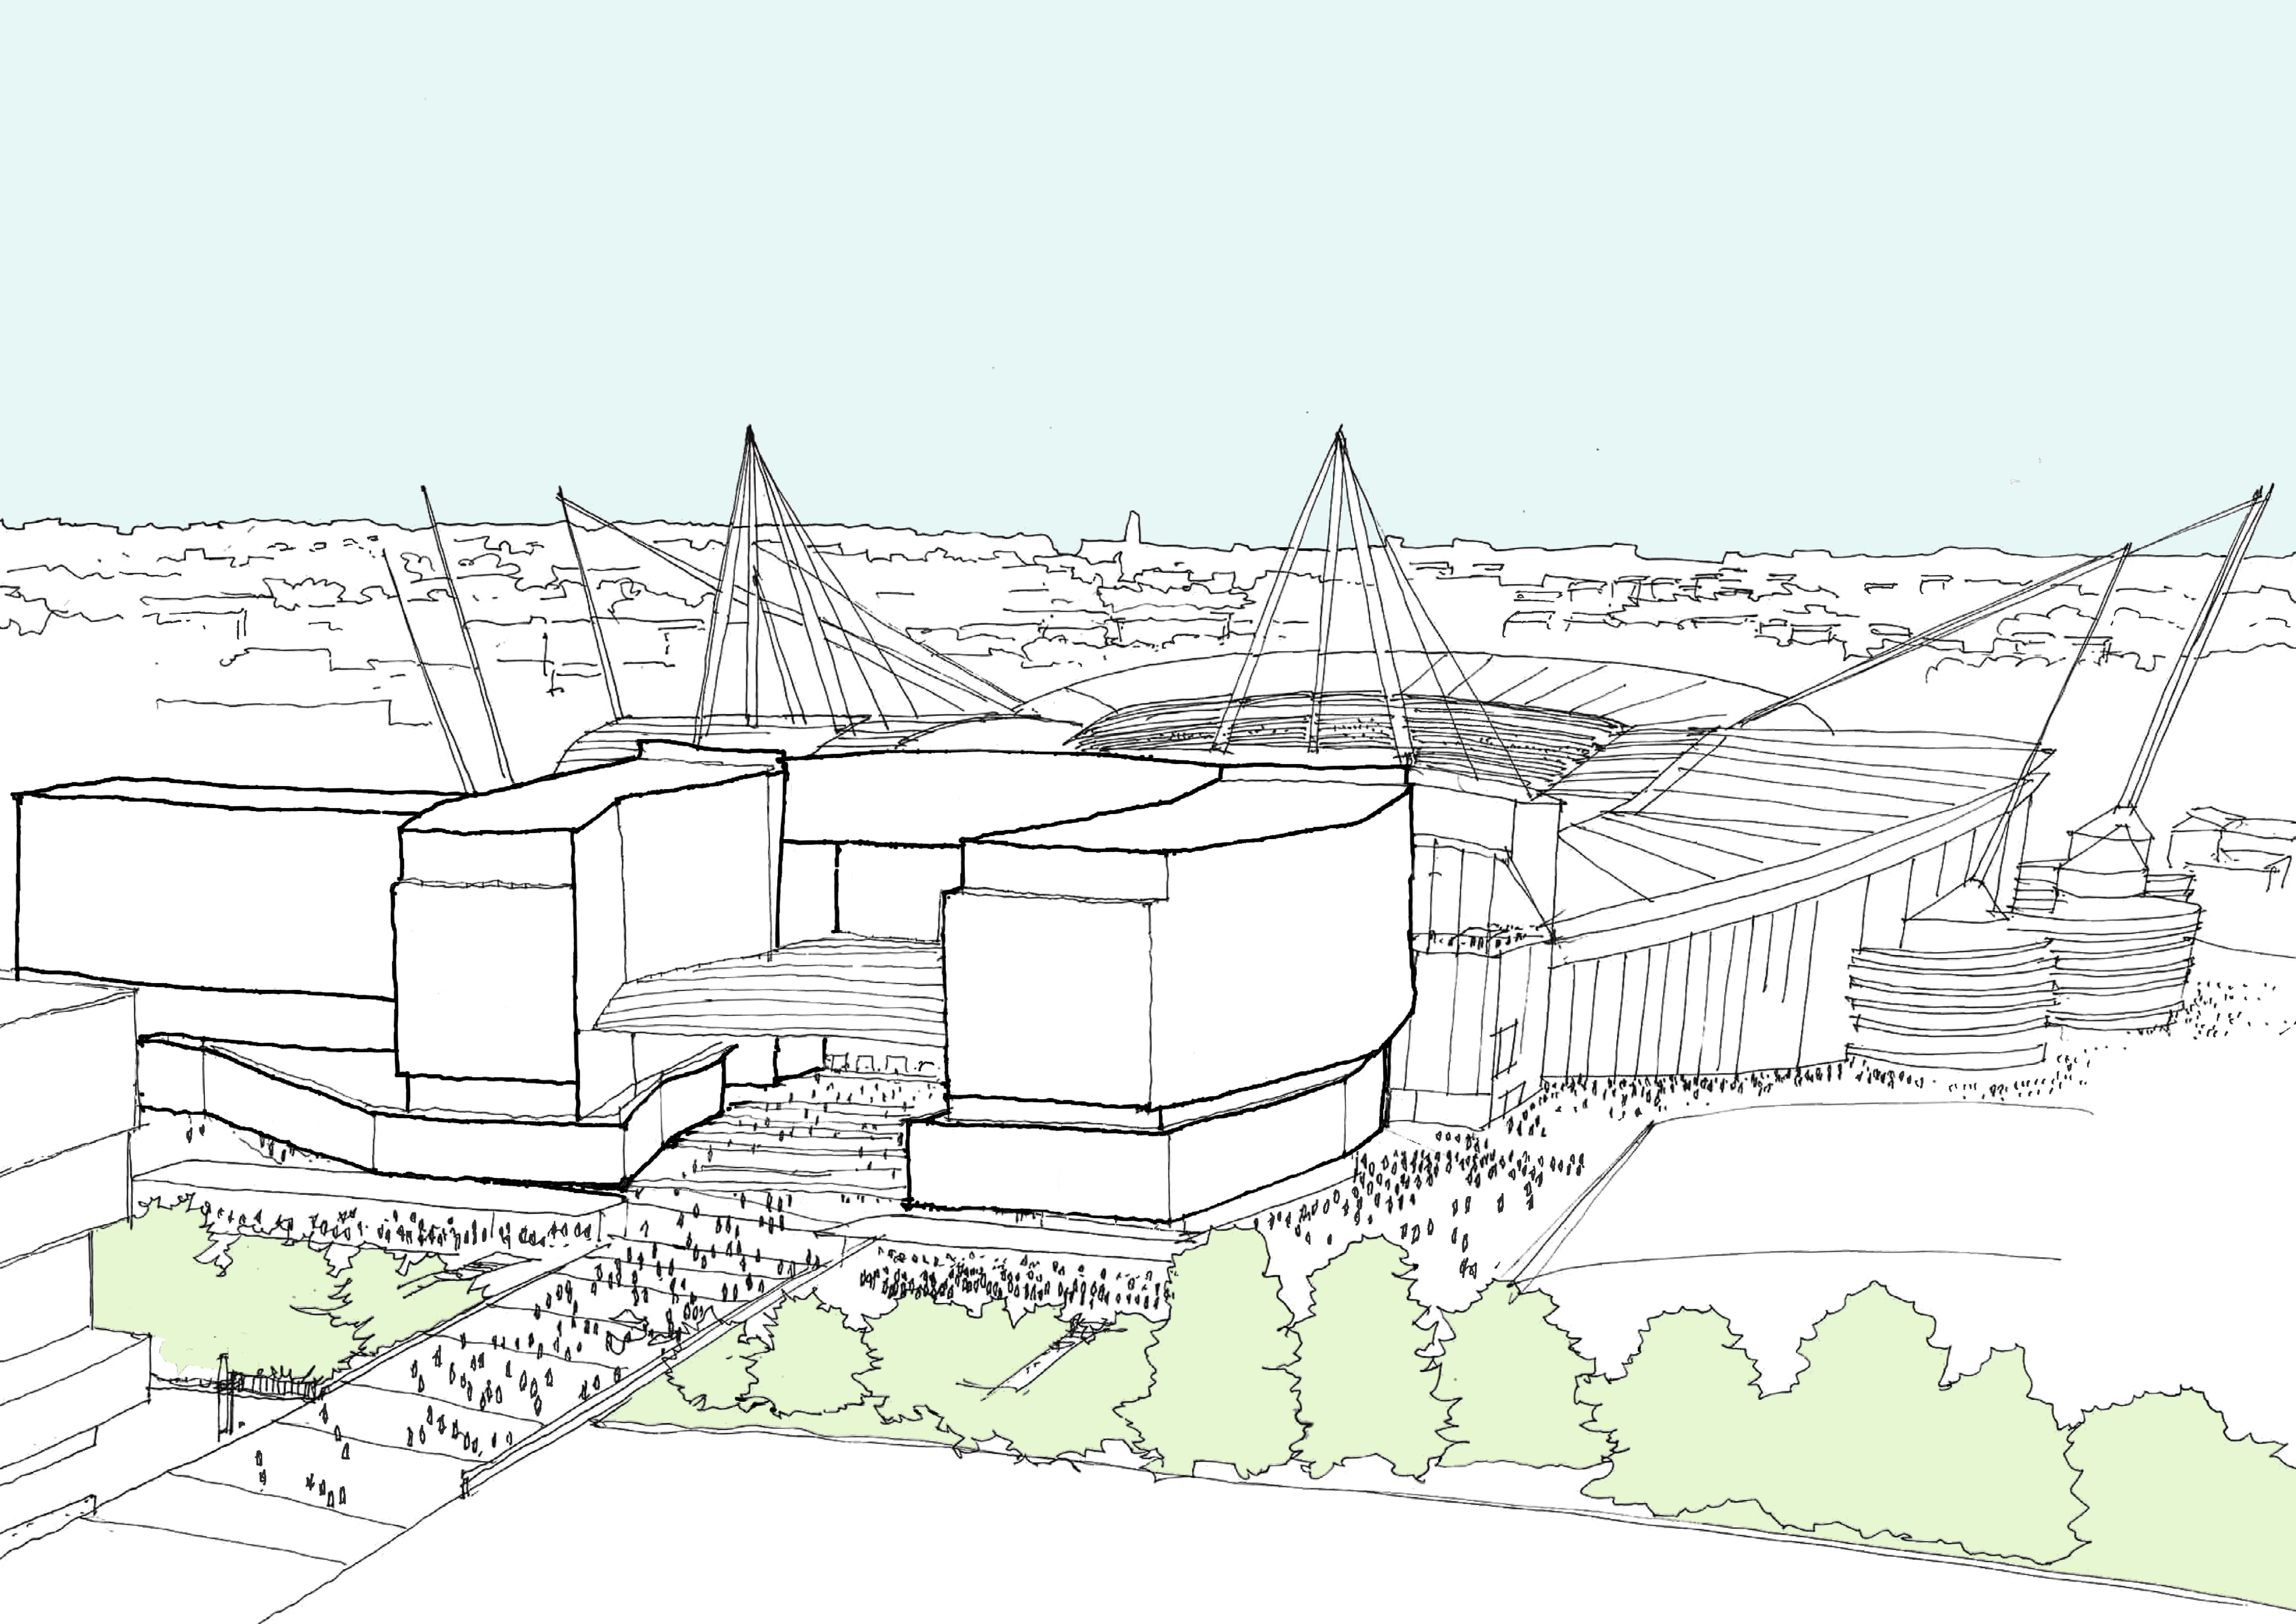 Man City unveil 'globally relevant' stadium and Etihad campus expansion plans